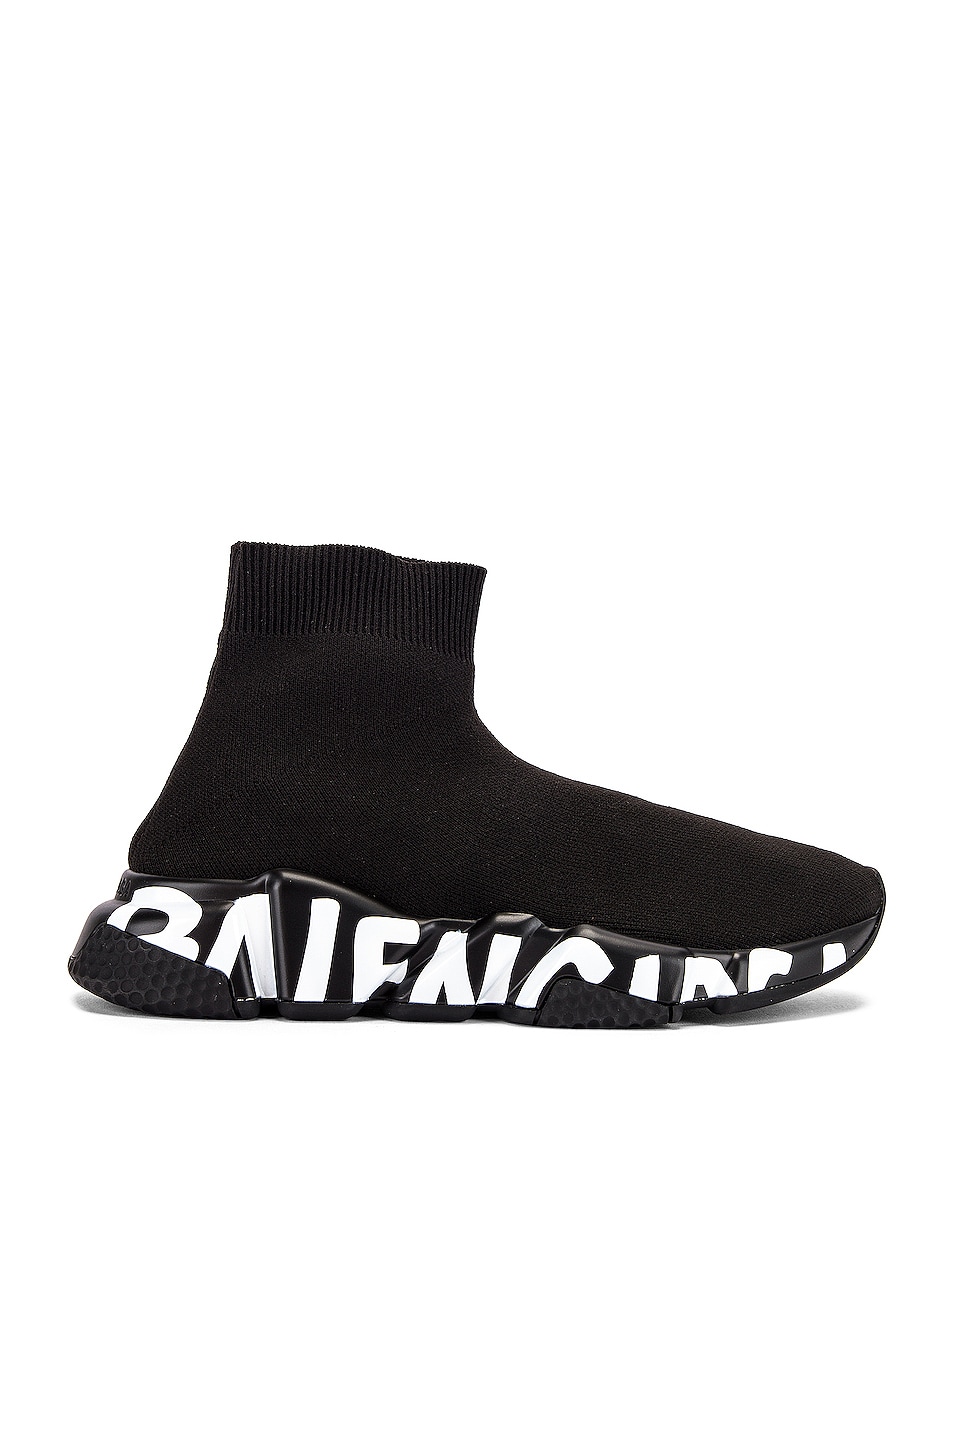 Balenciaga Speed Lt Graffiti Sneakers in Black & Black & White | FWRD